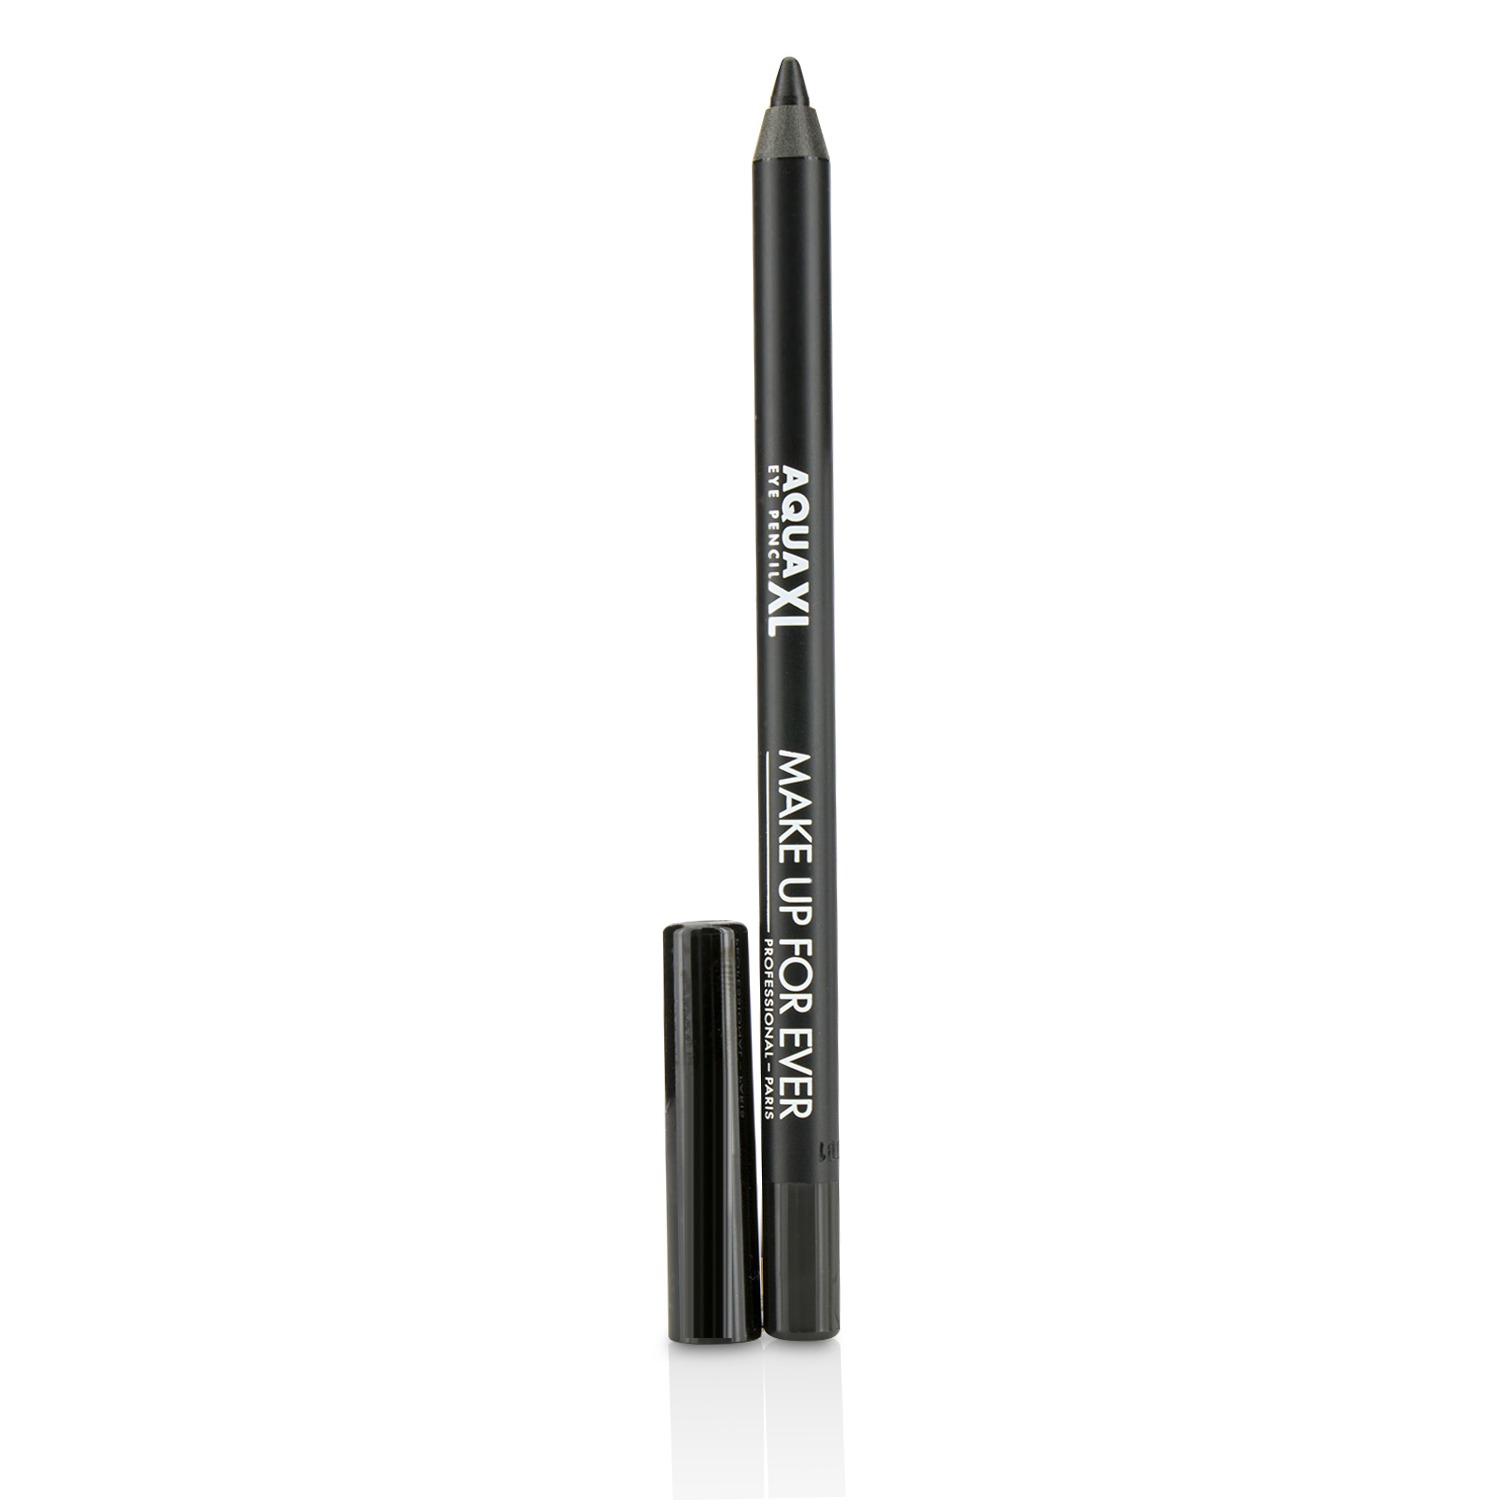 Aqua XL Extra Long Lasting Waterproof Eye Pencil - # M-10 (Matte Black) Make Up For Ever Image